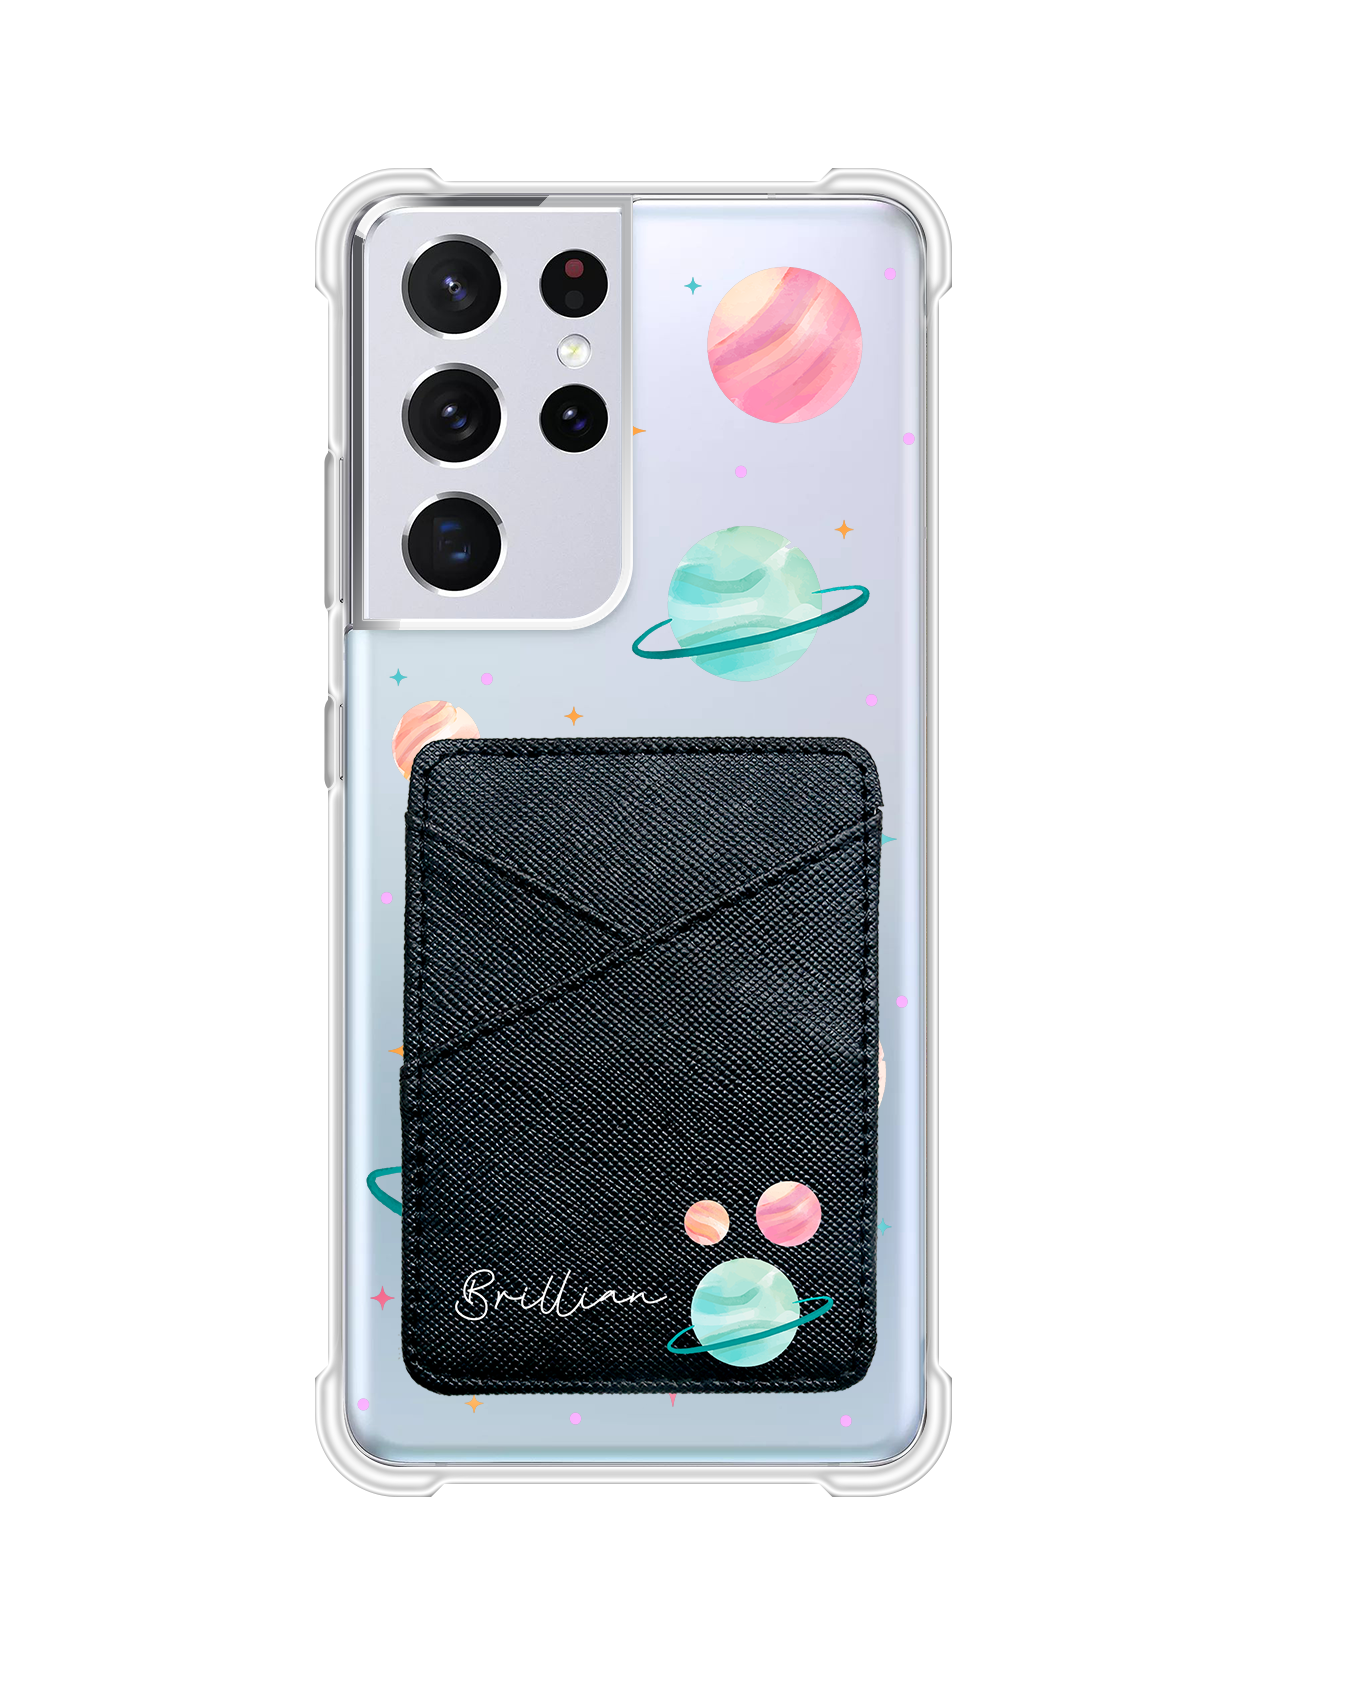 Android Phone Wallet Case - Planetarium 1.0